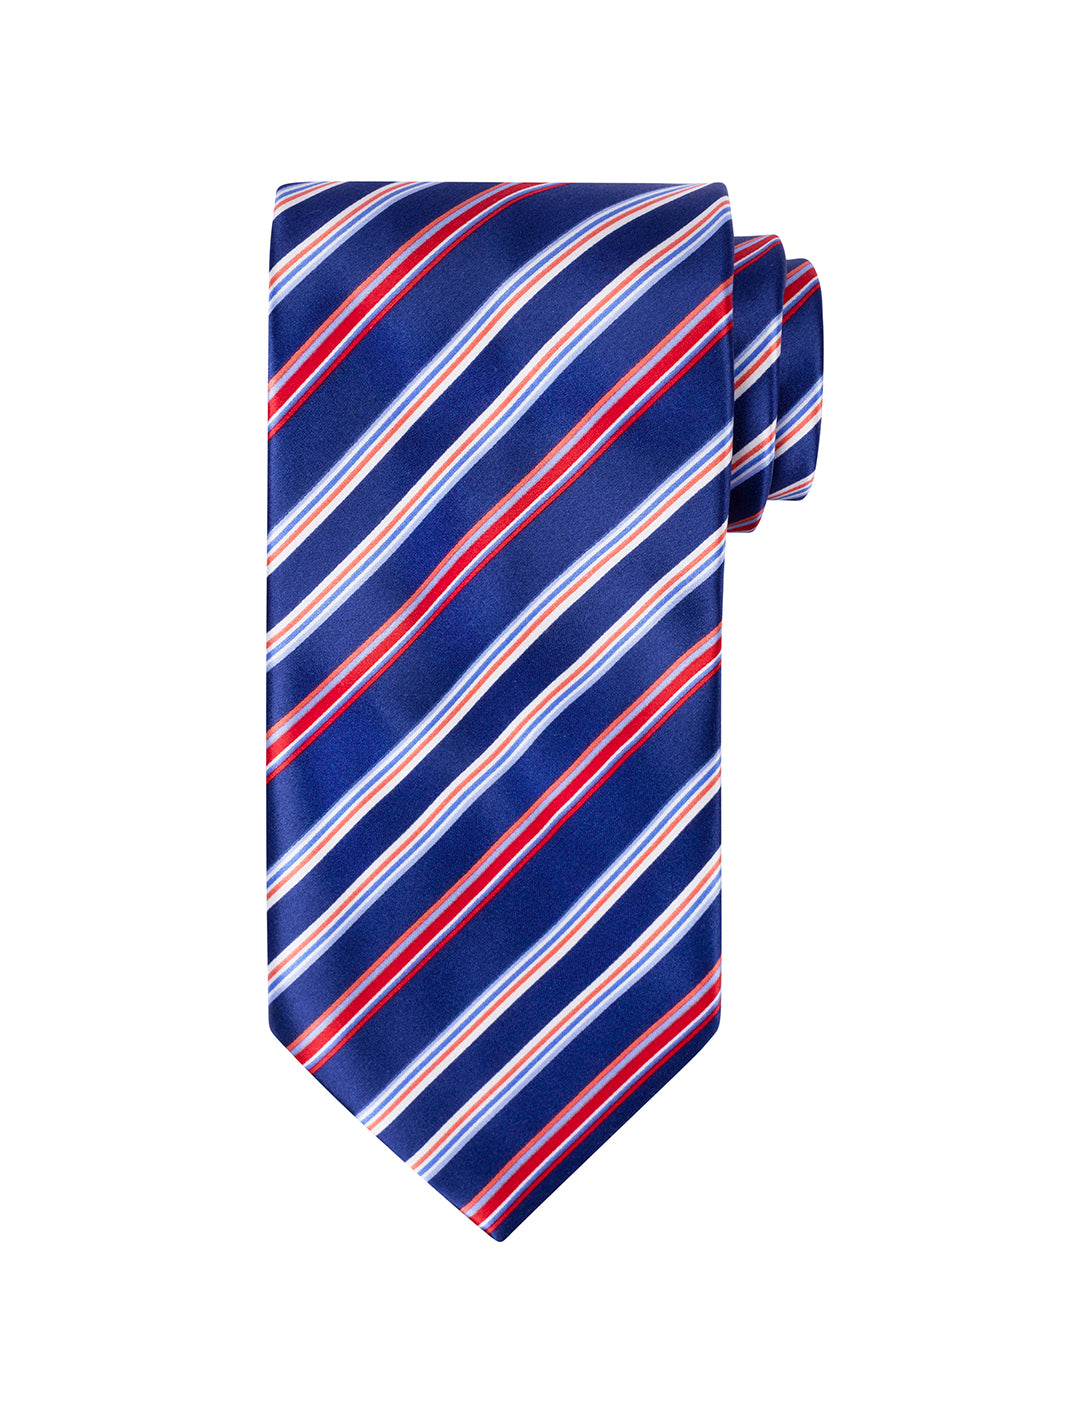 Stefano Ricci Red and Blue Stripe Tie